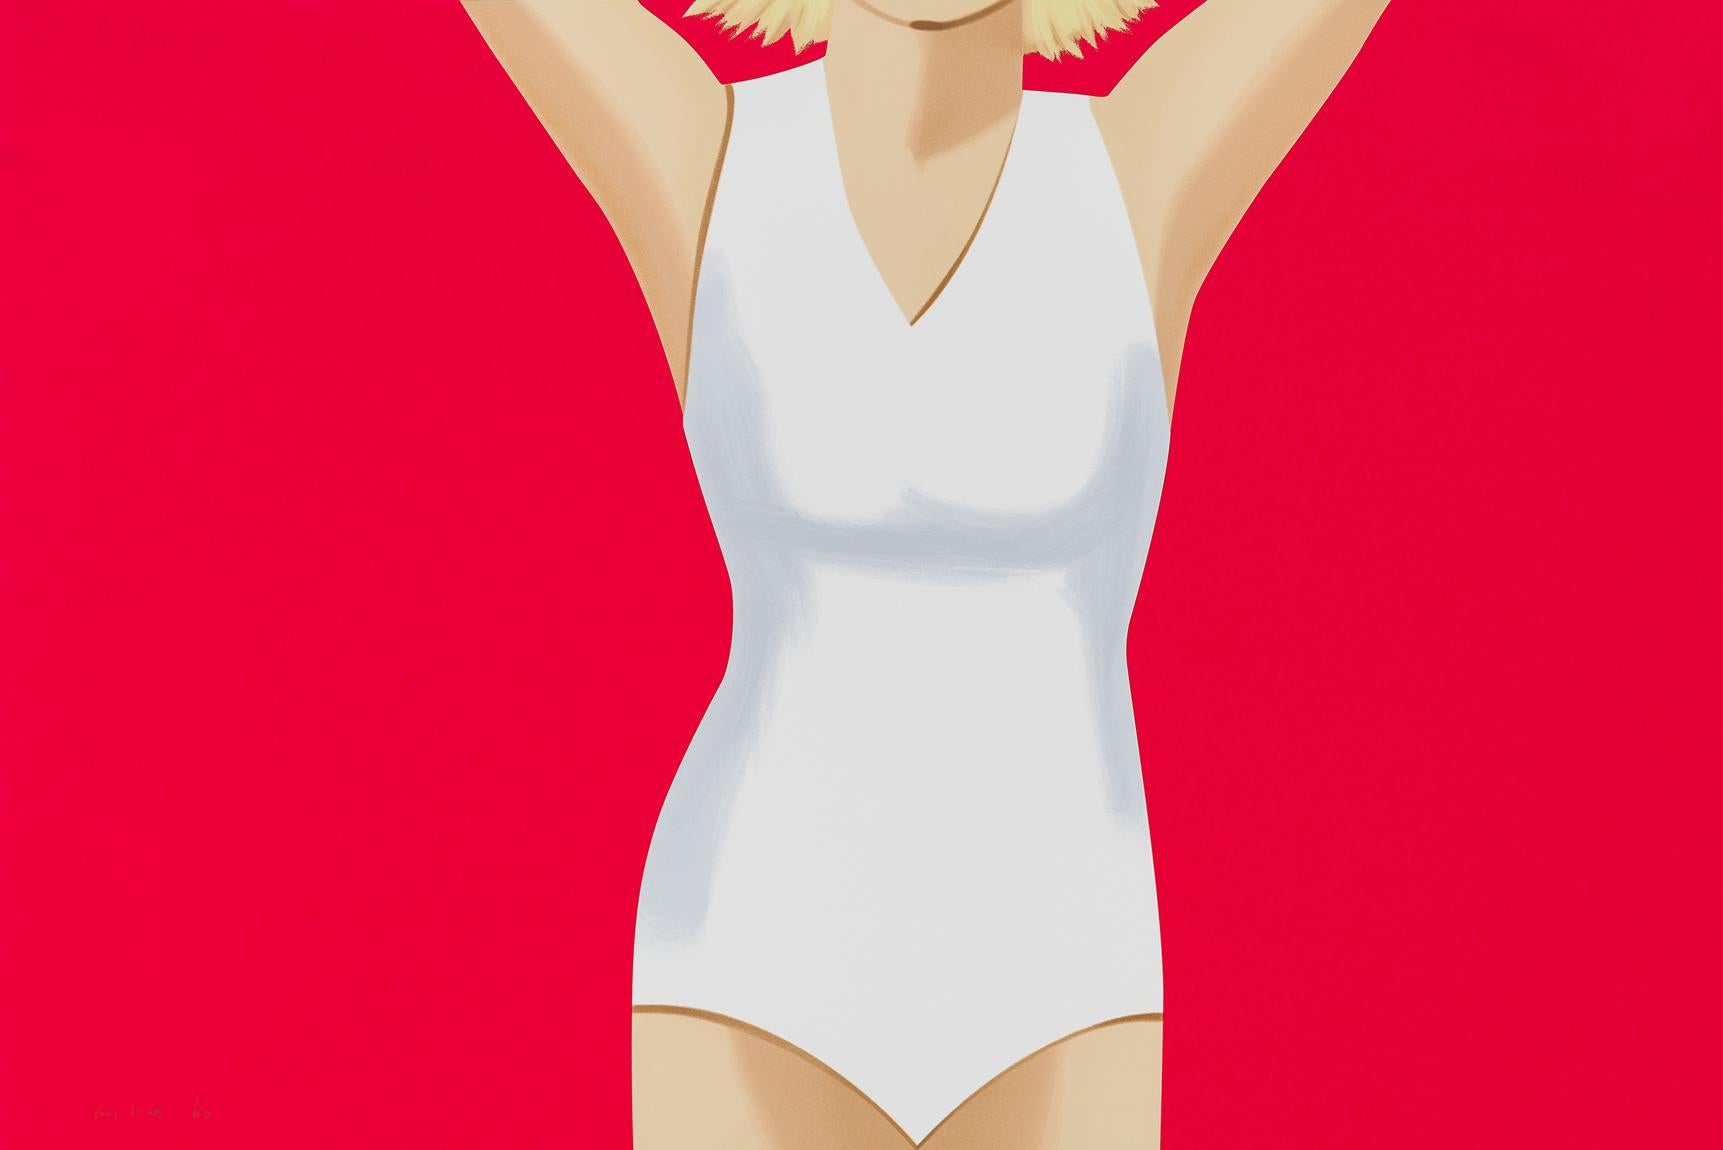 Coca-Cola Girl 2 - 21st Century, Contemporary, Alex Katz, Swim Suit, Woman, Red